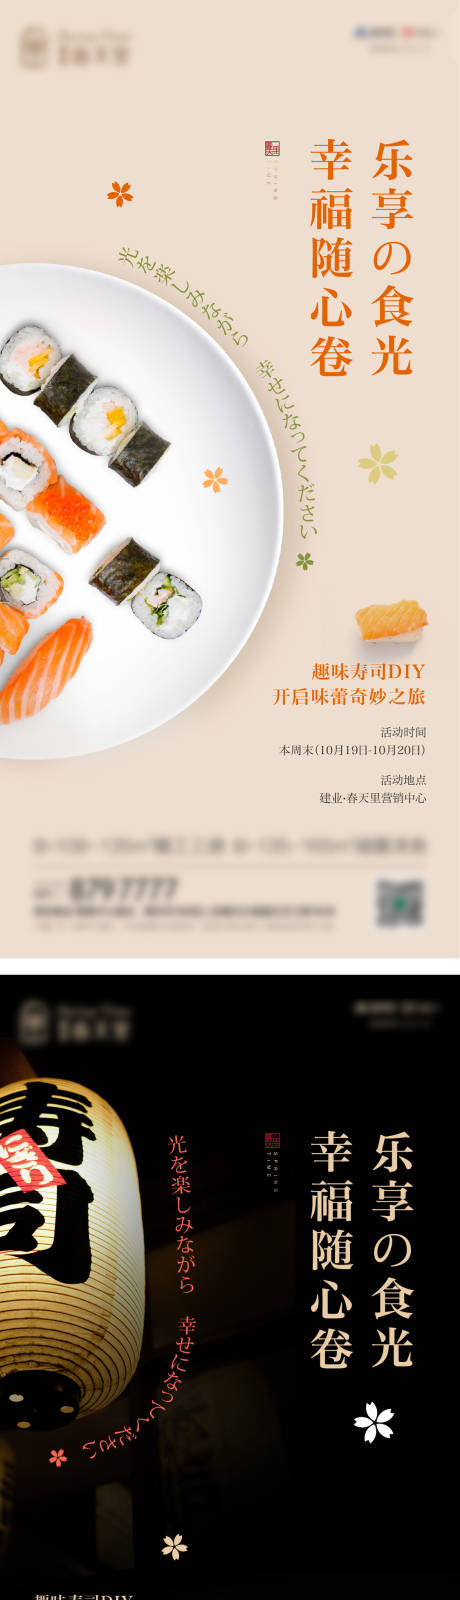 寿司DIY活动海报